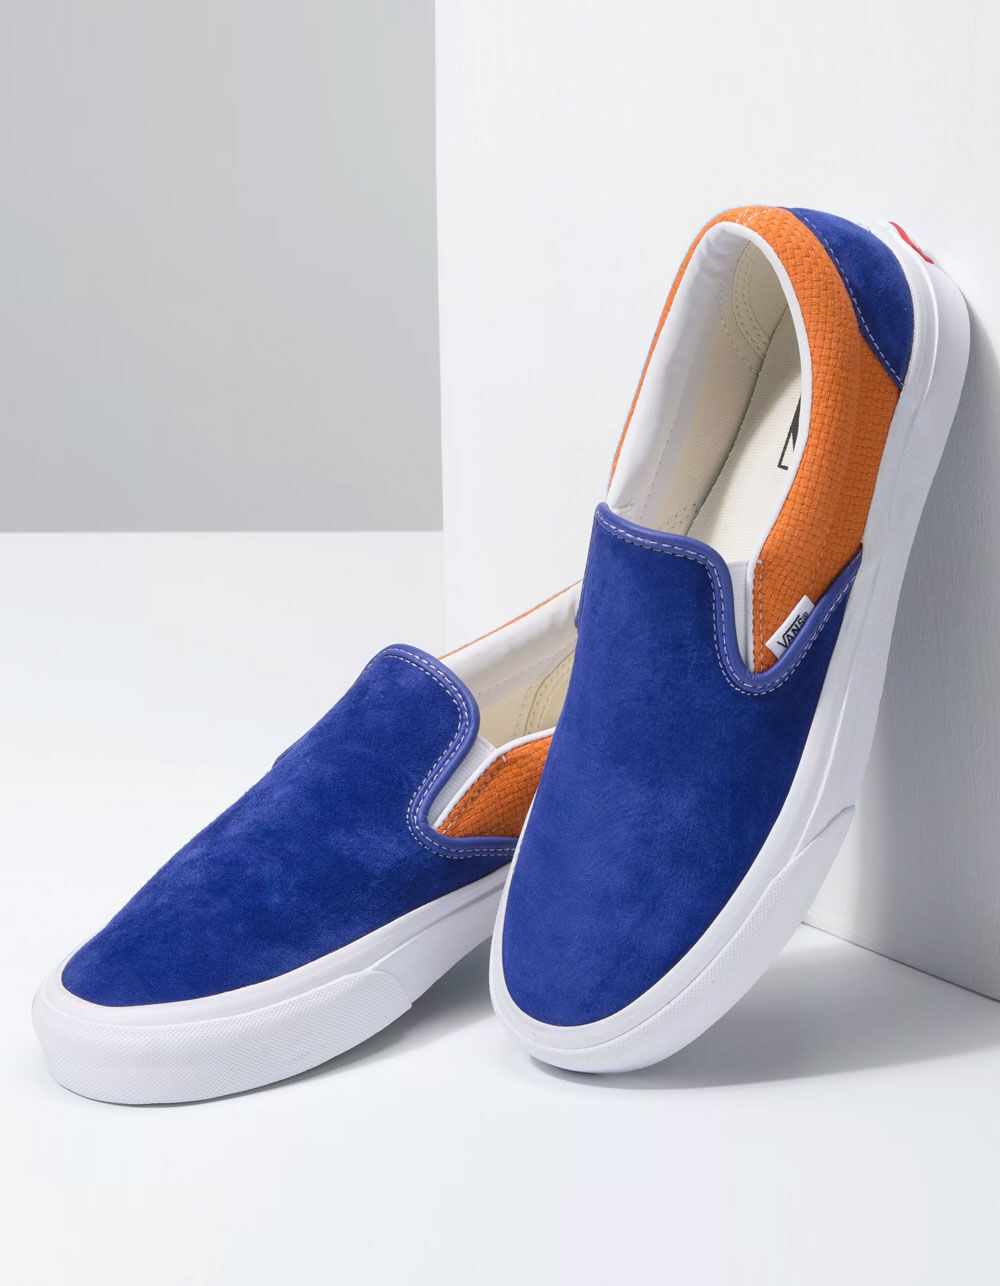 VANS P&C Classic Slip-On Shoes - ROYAL BLUE/APRICOT BUFF | Tillys